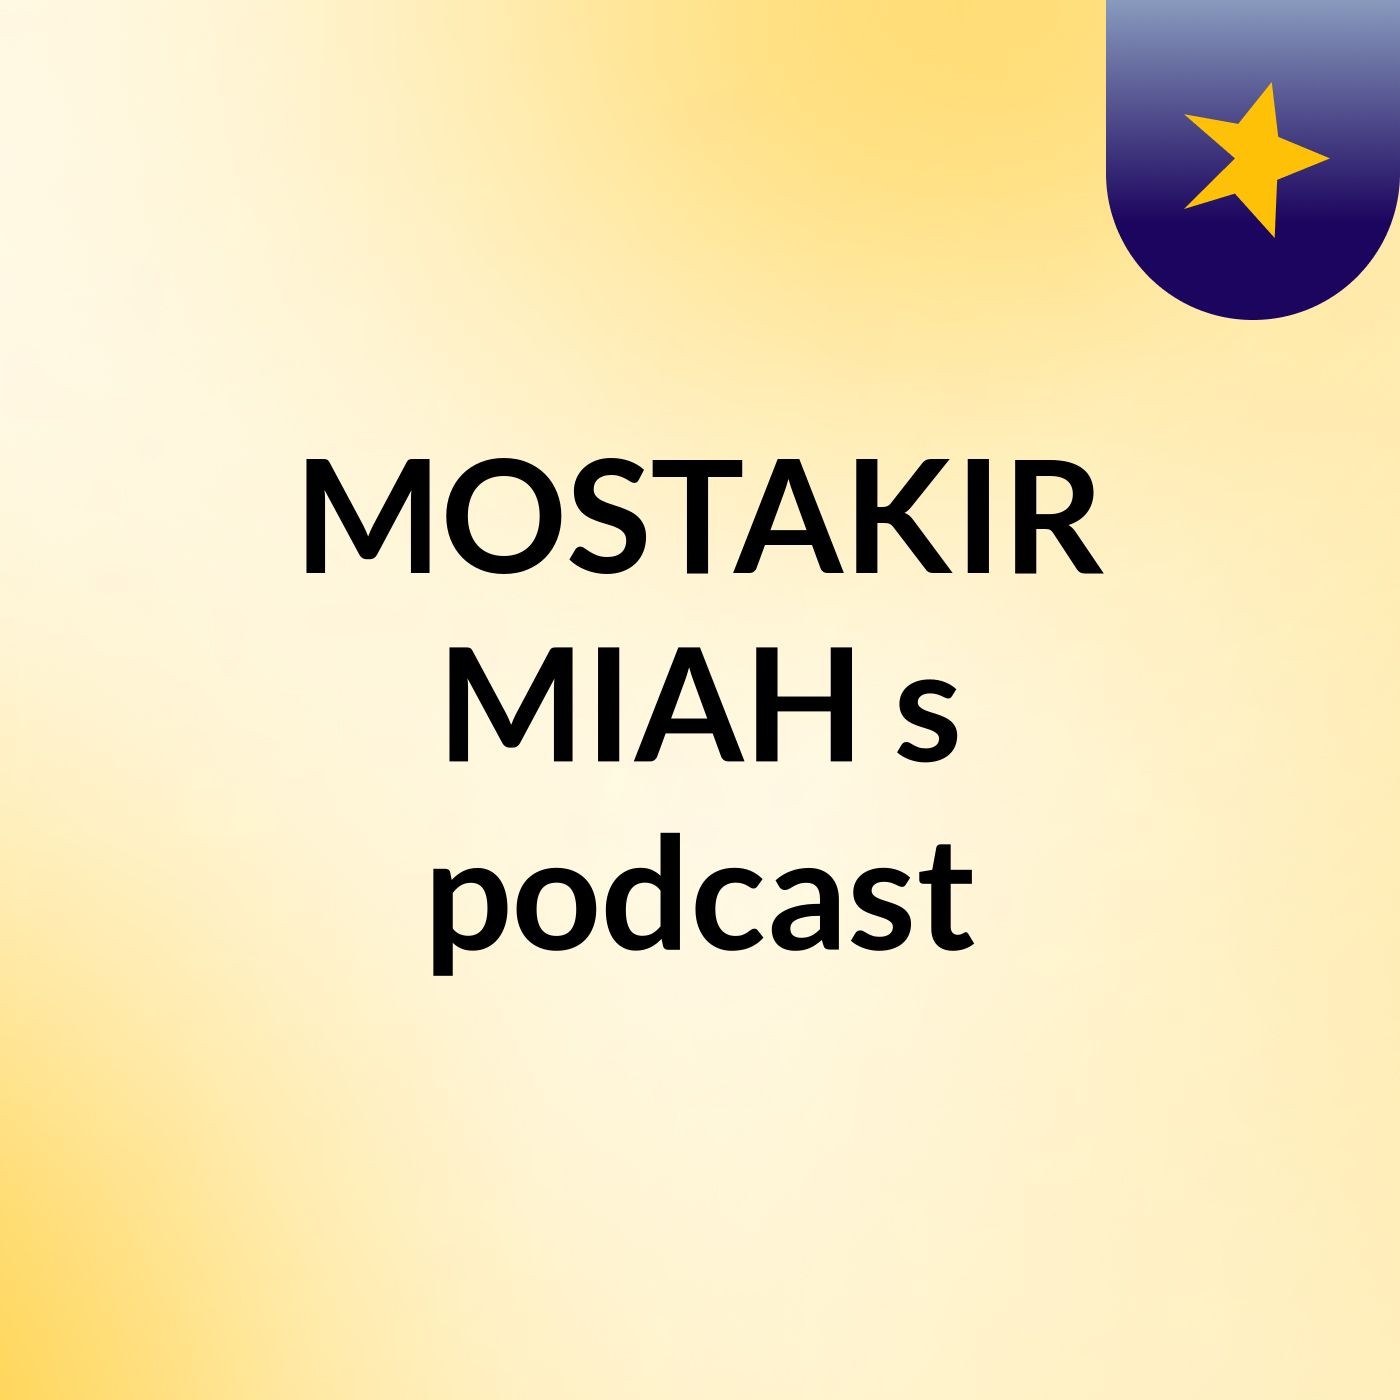 MOSTAKIR MIAH's podcast